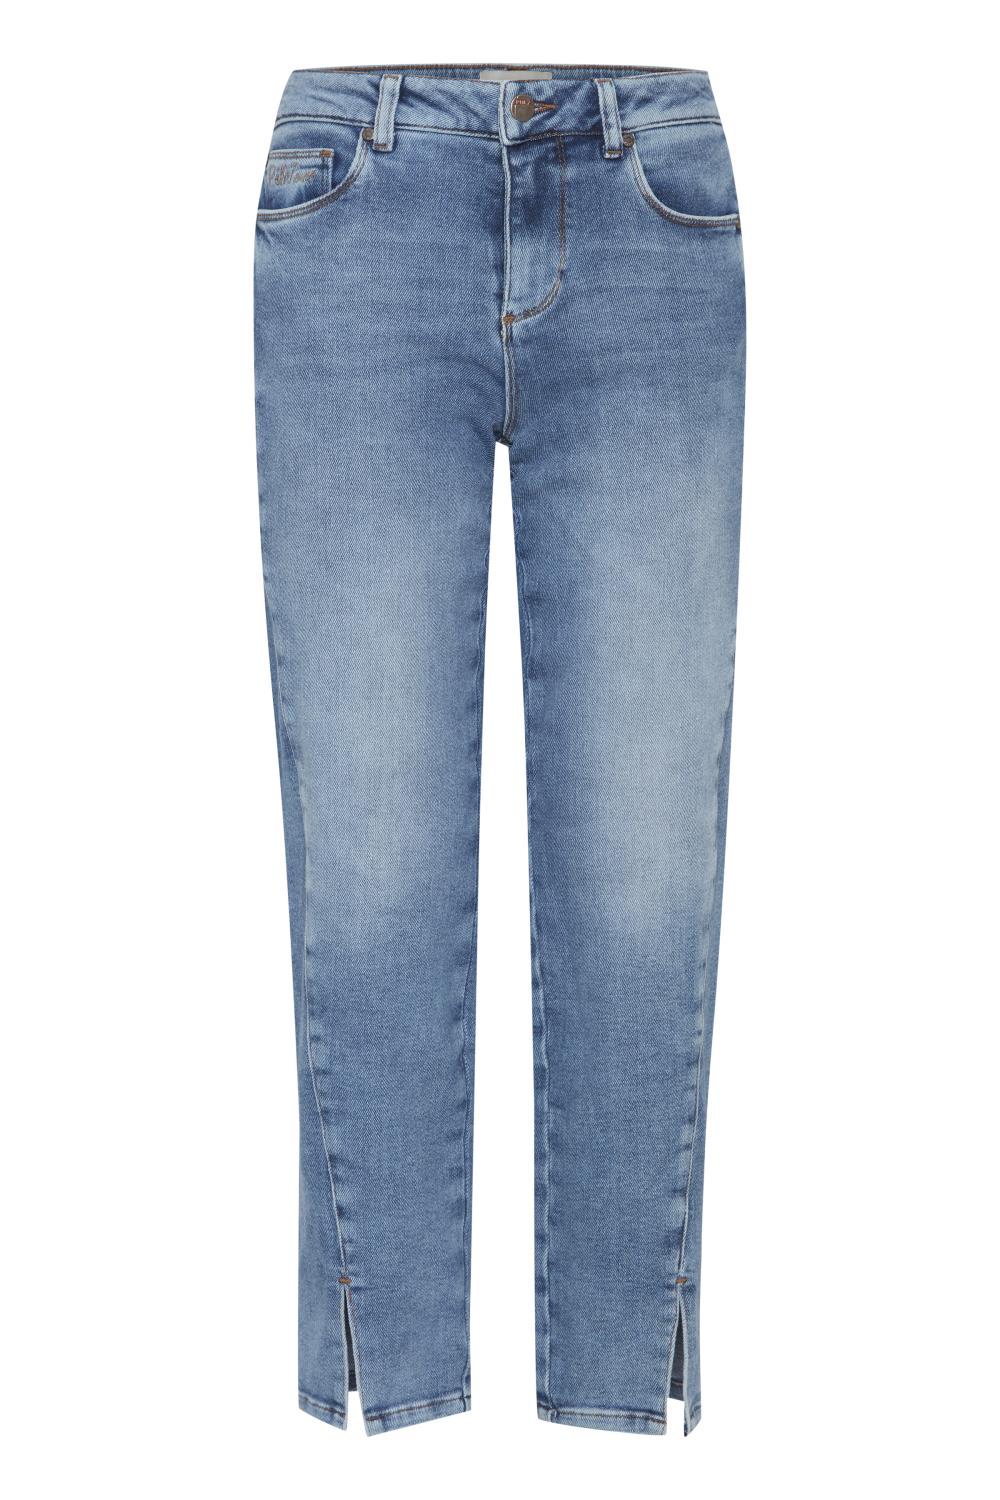 Pulz Emma jeans straight leg, light medium denim